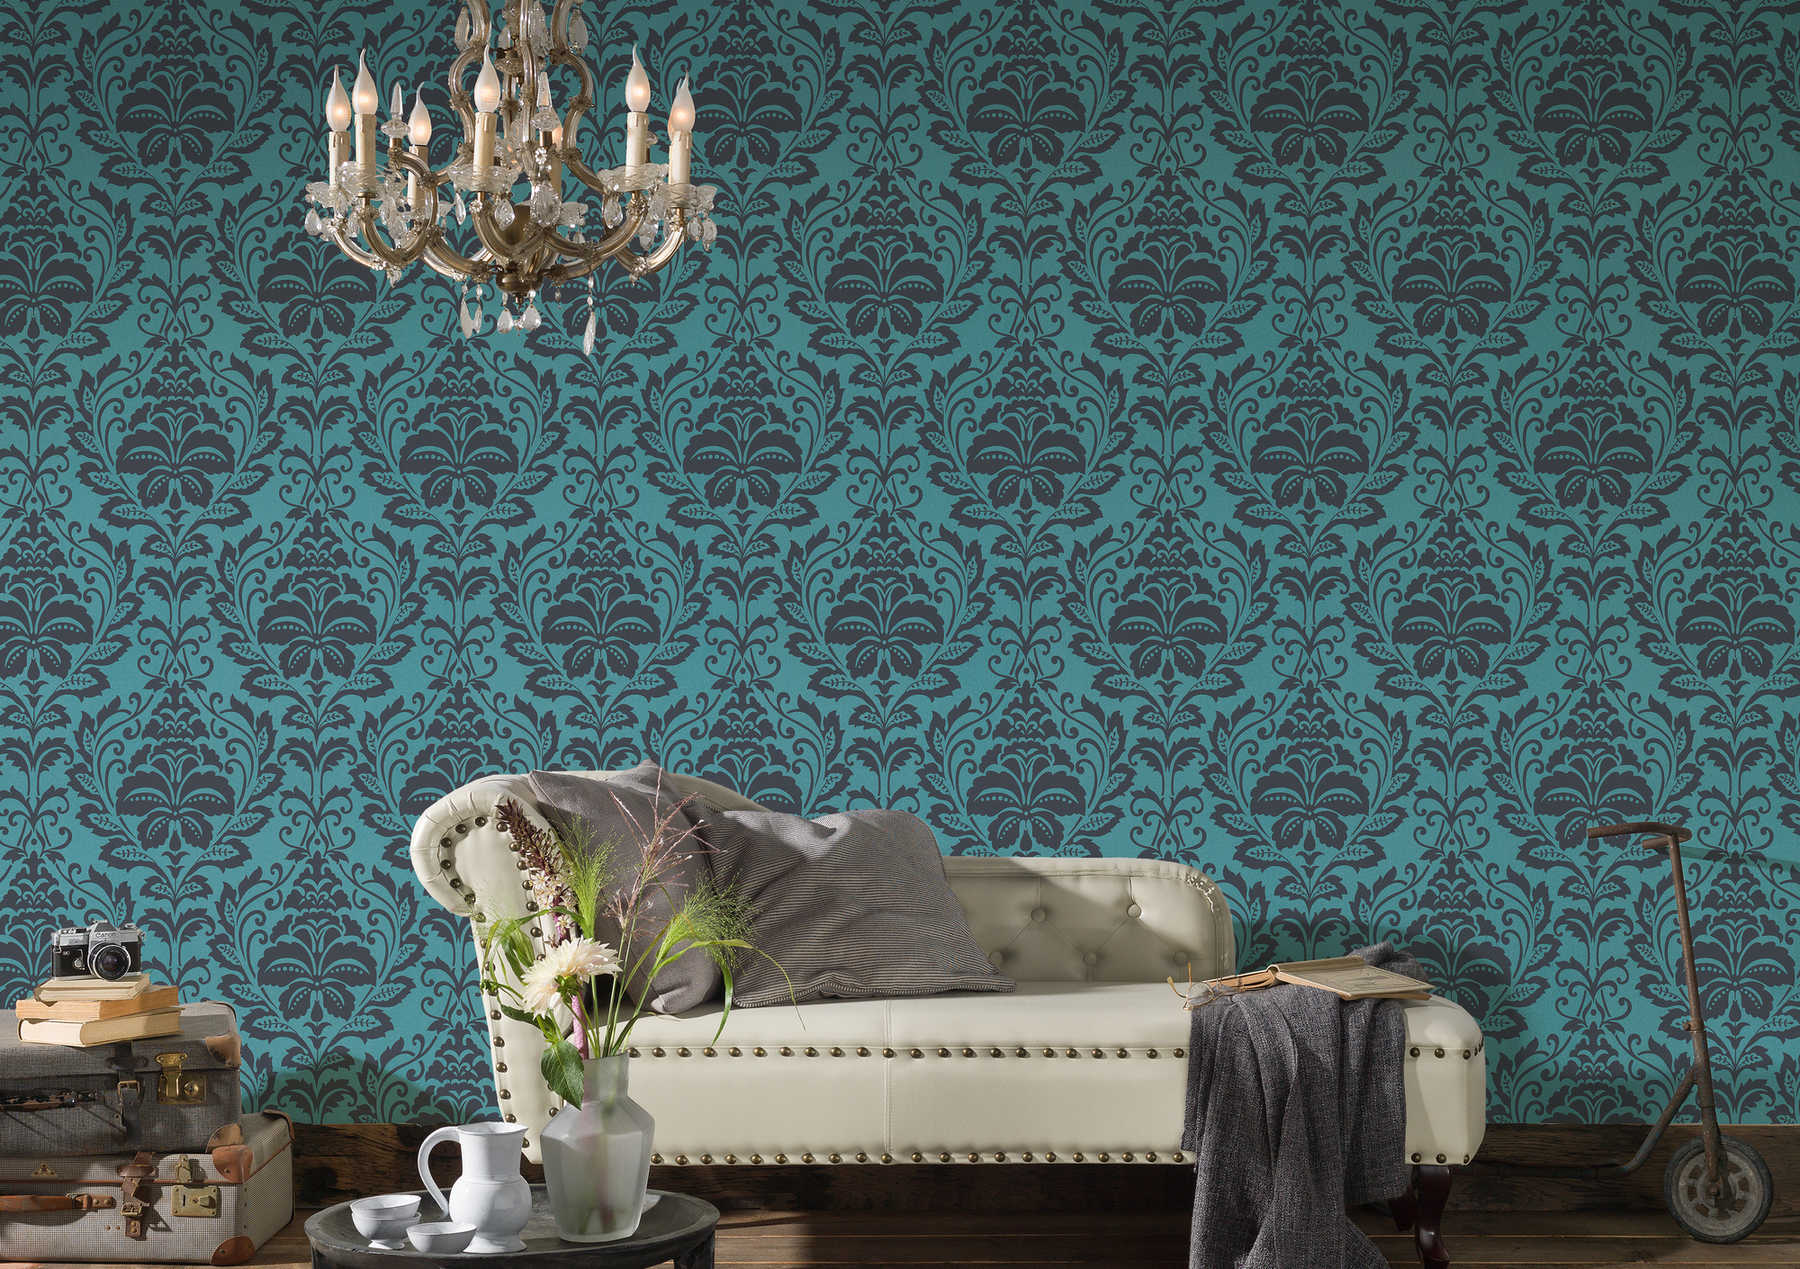             Neo classic ornament wallpaper, floral - blue, black
        